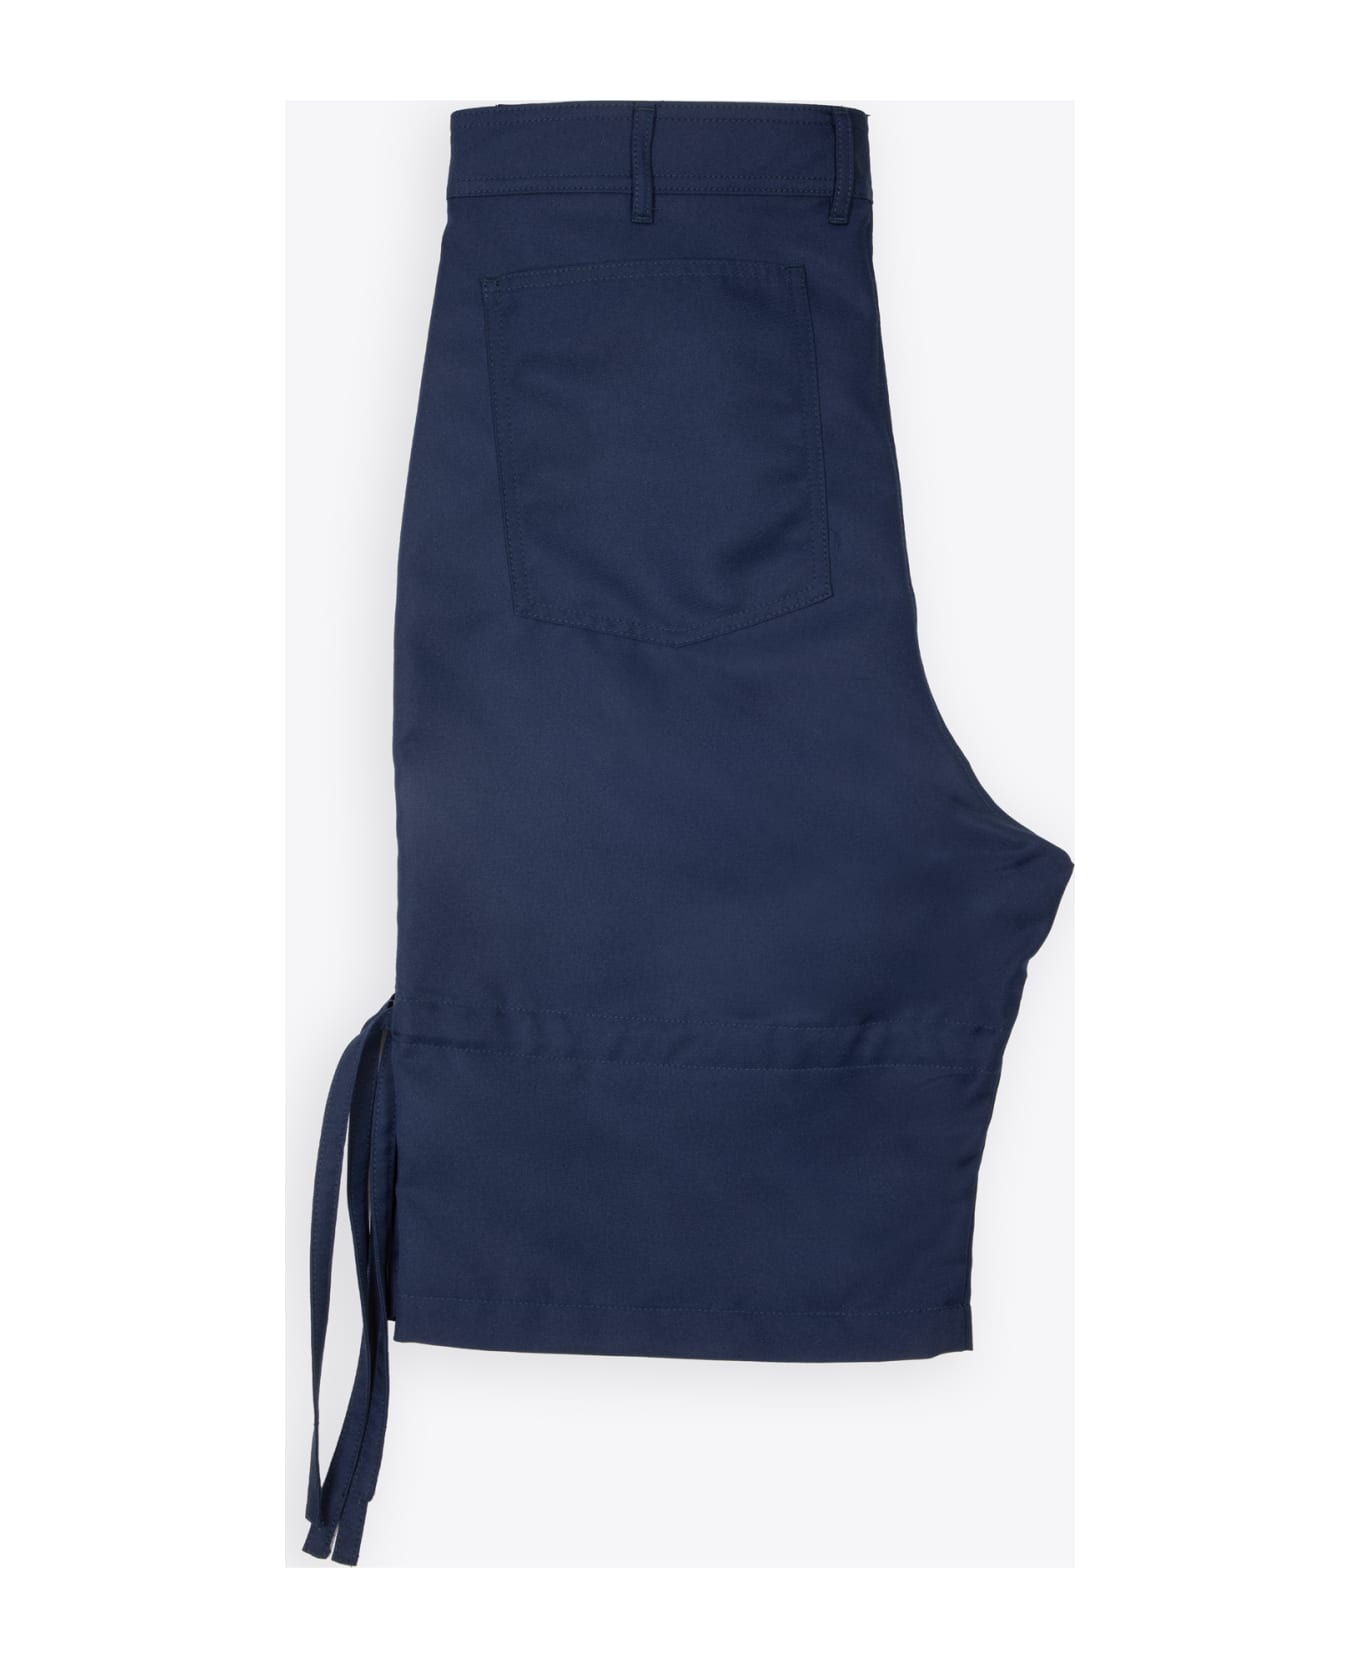 Comme des Garçons Shirt Mens Pants Woven Navy blue baggy shorts with ribbons detail - Blu